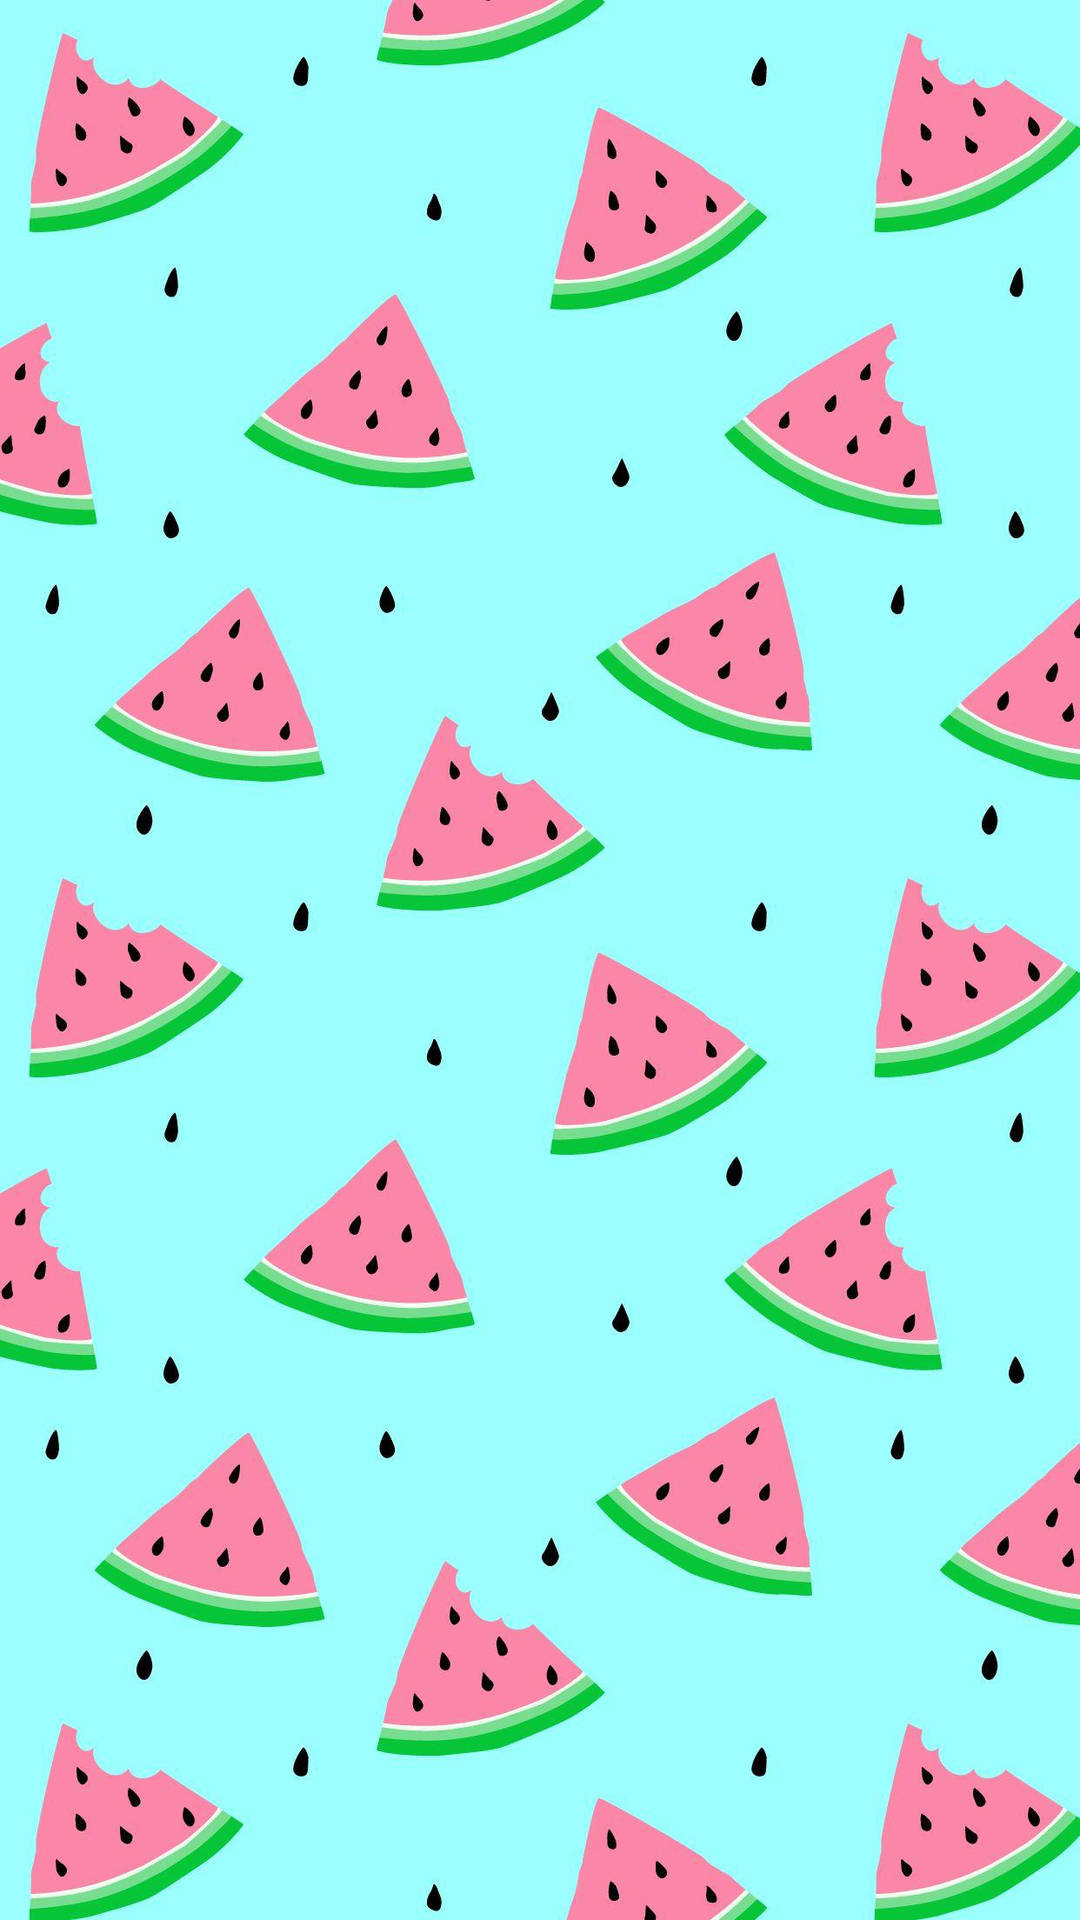 Top 999+ Cute Watermelon Wallpaper Full HD, 4K✅Free to Use